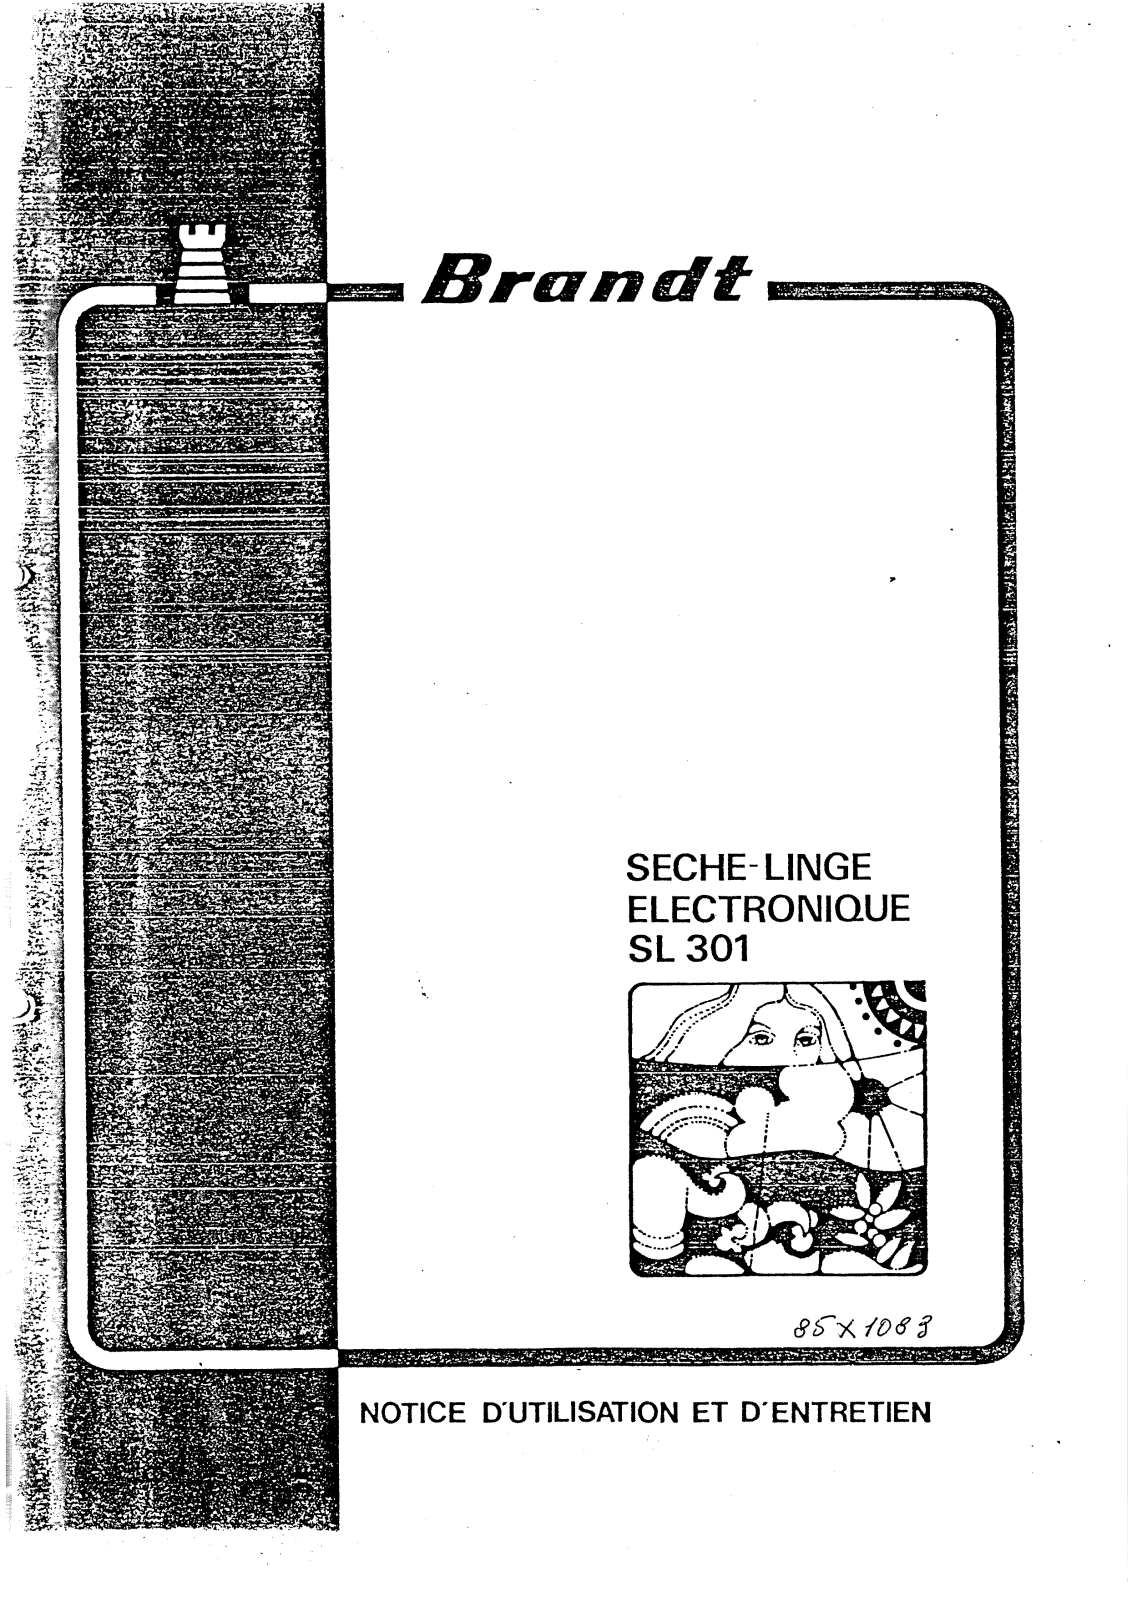 BRANDT SL301 User Manual